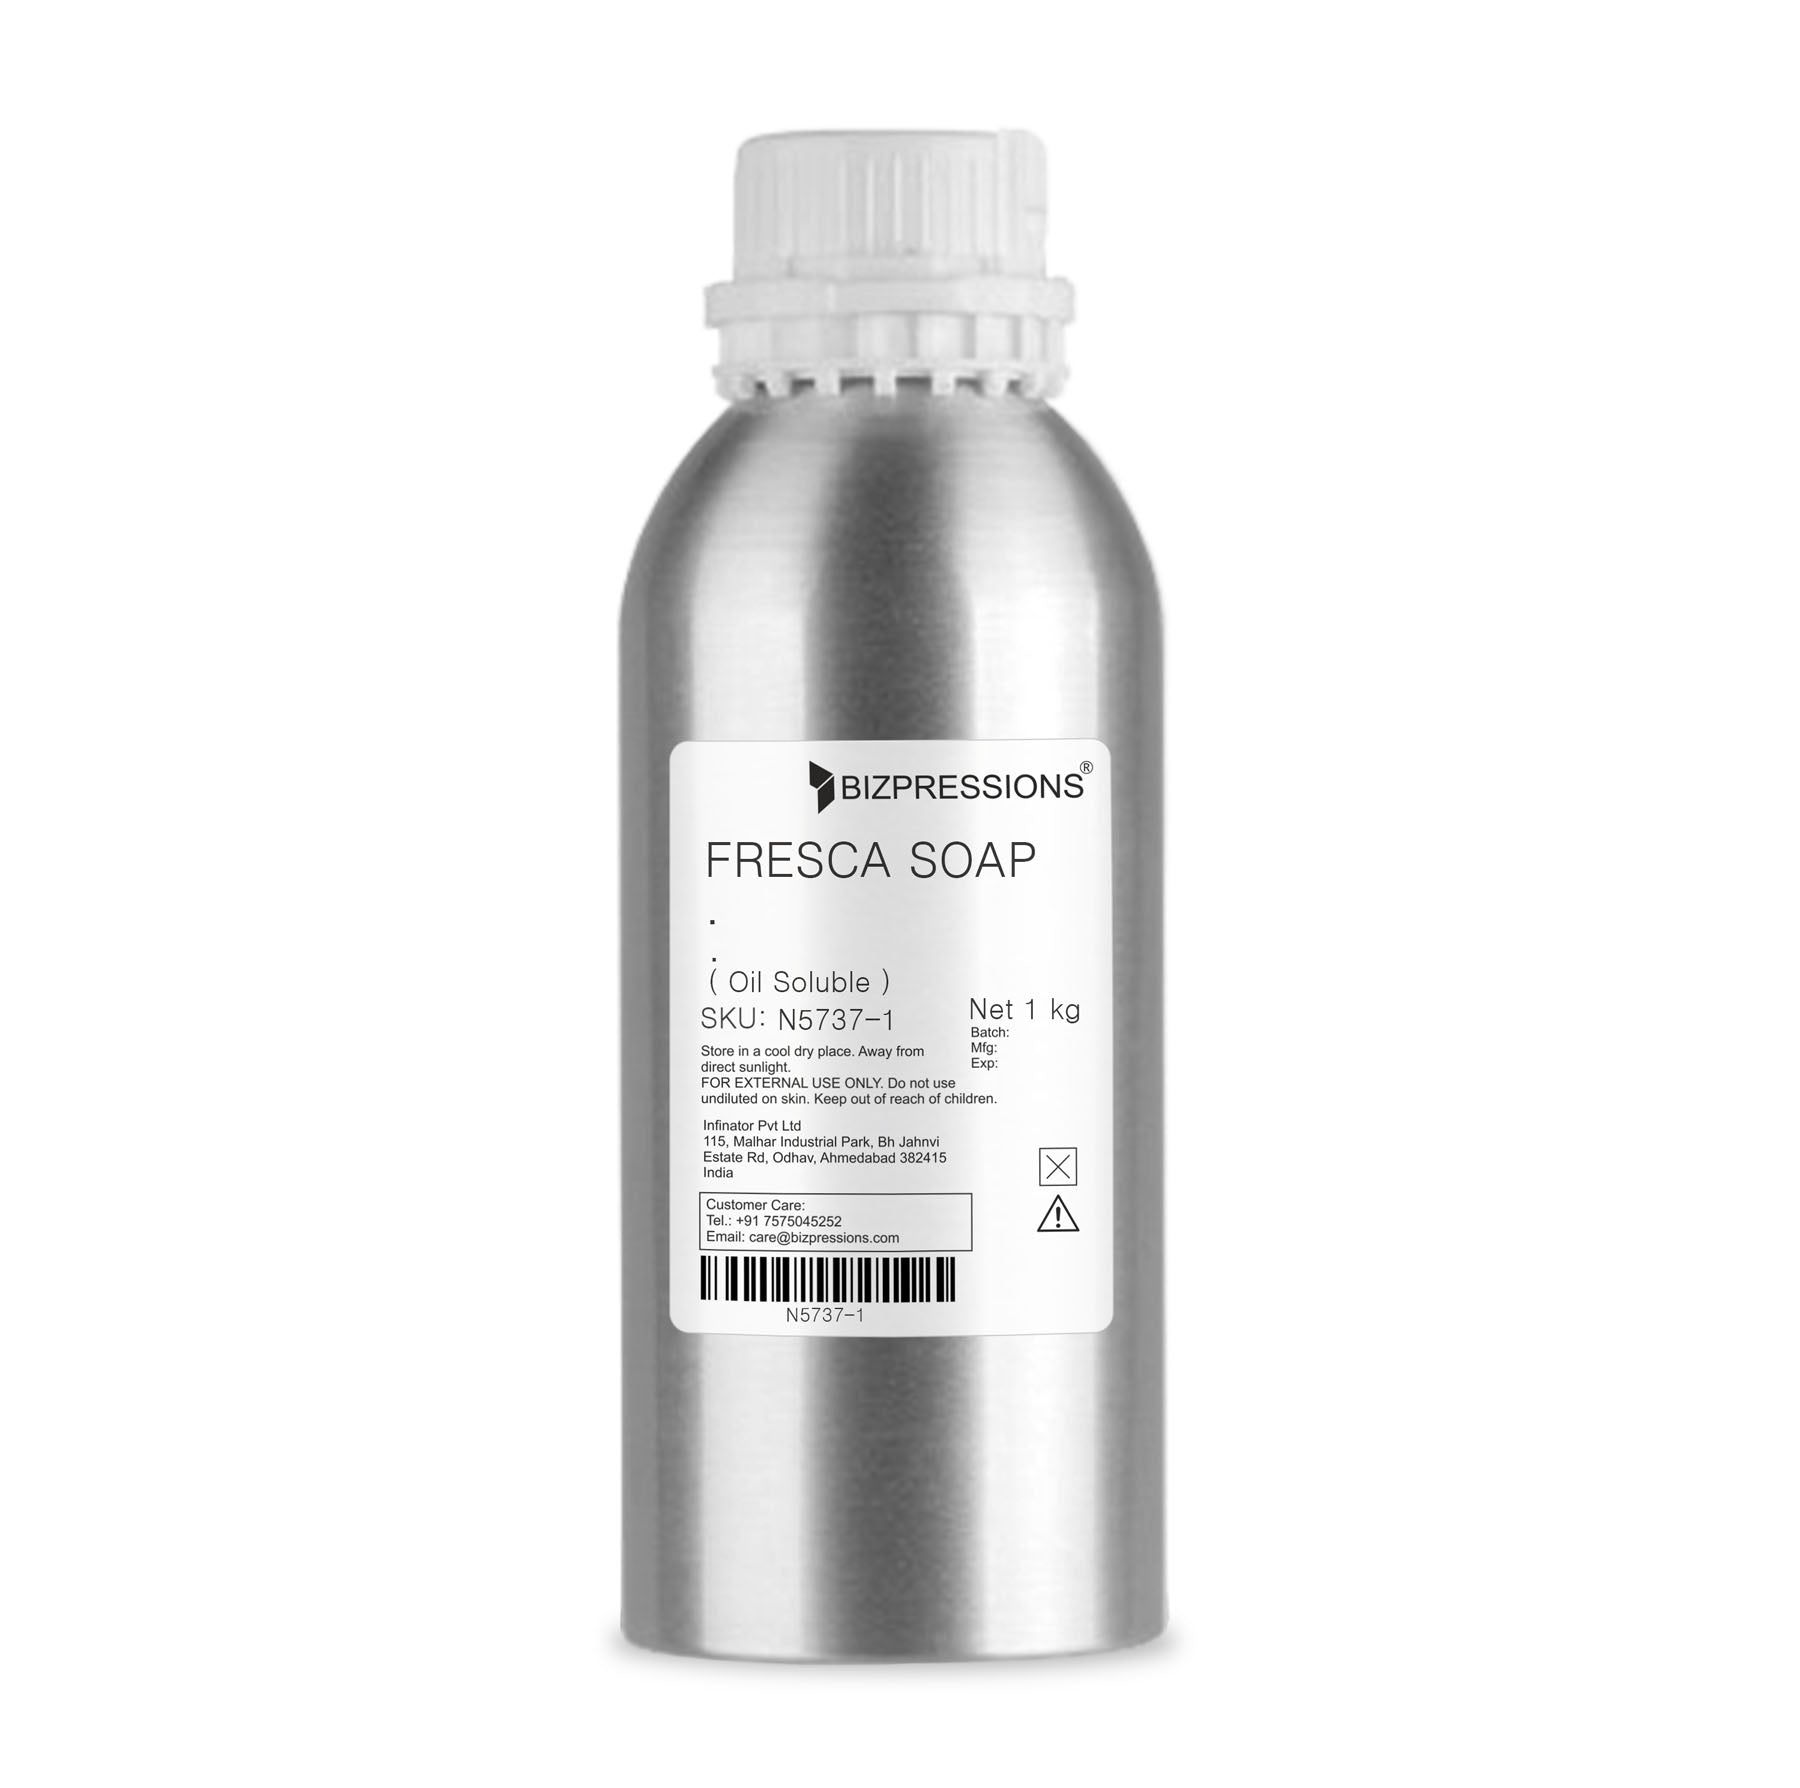 FRESCA SOAP - Fragrance ( Oil Soluble ) - 1 kg